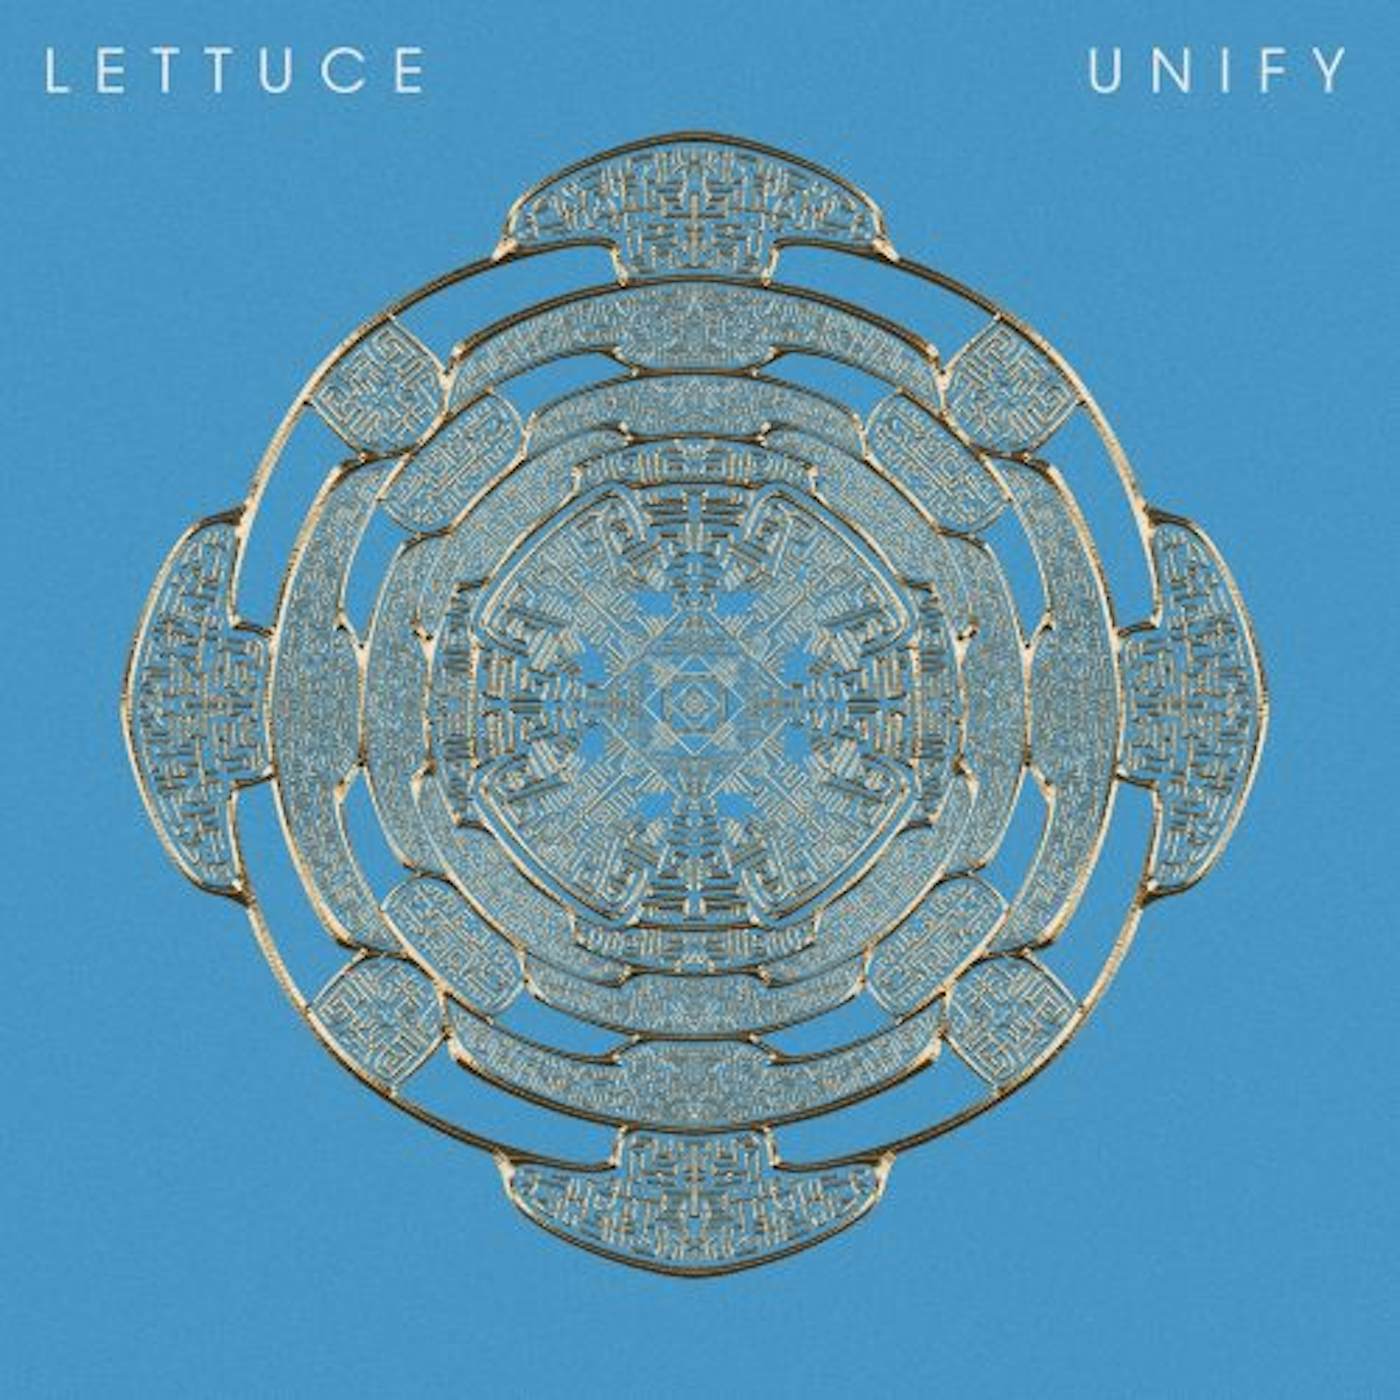 Lettuce Unify Vinyl Record